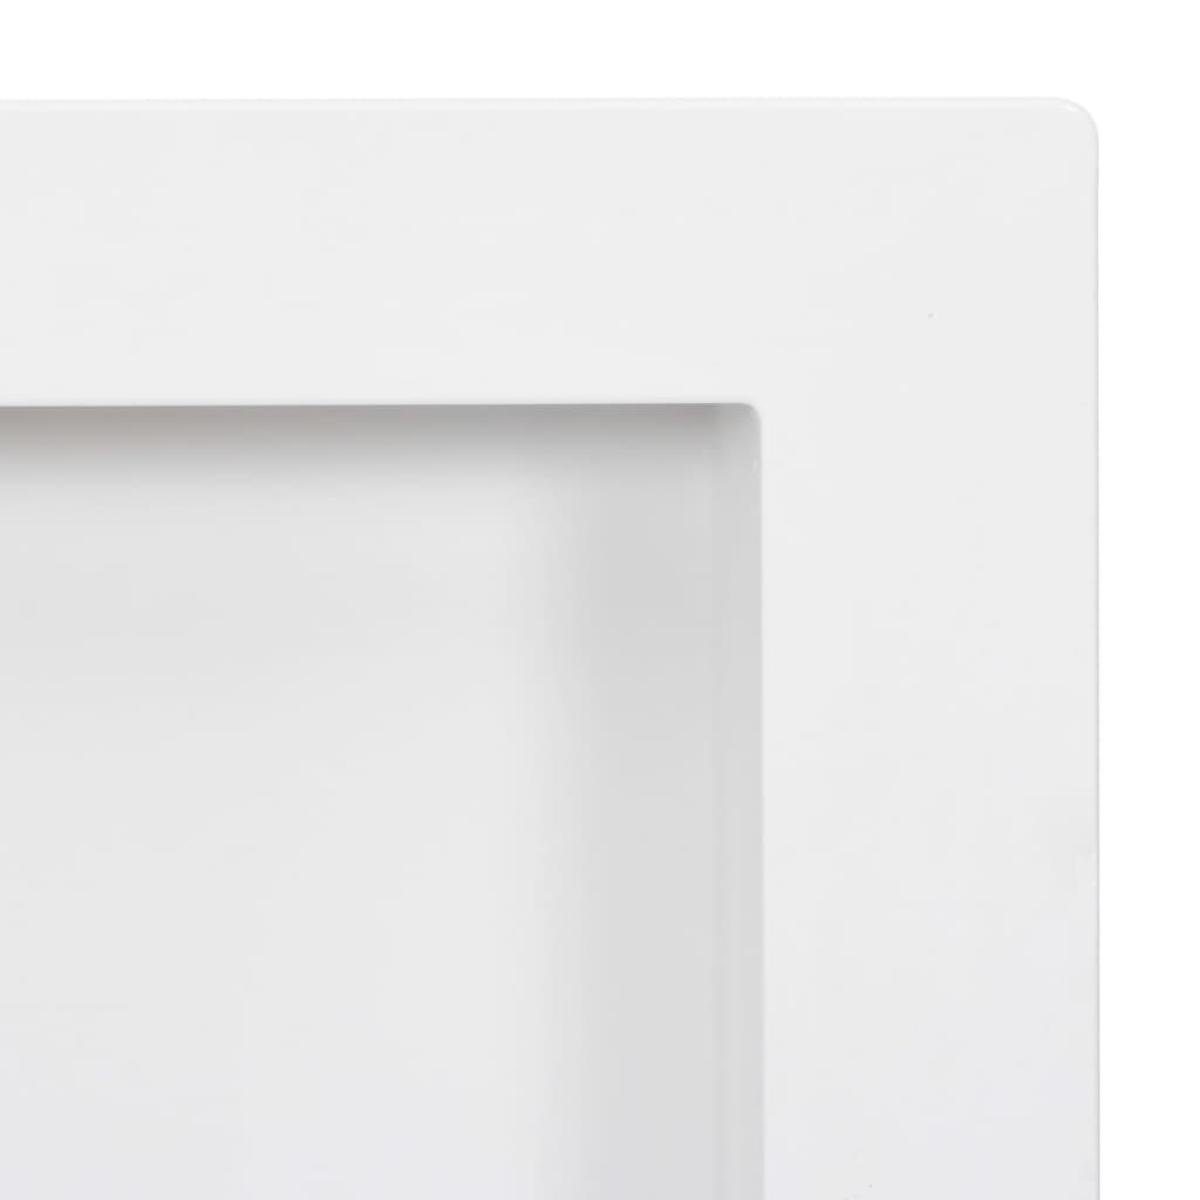 Hornacina de ducha 2 compartimentos blanco brillo 41x51x10 cm